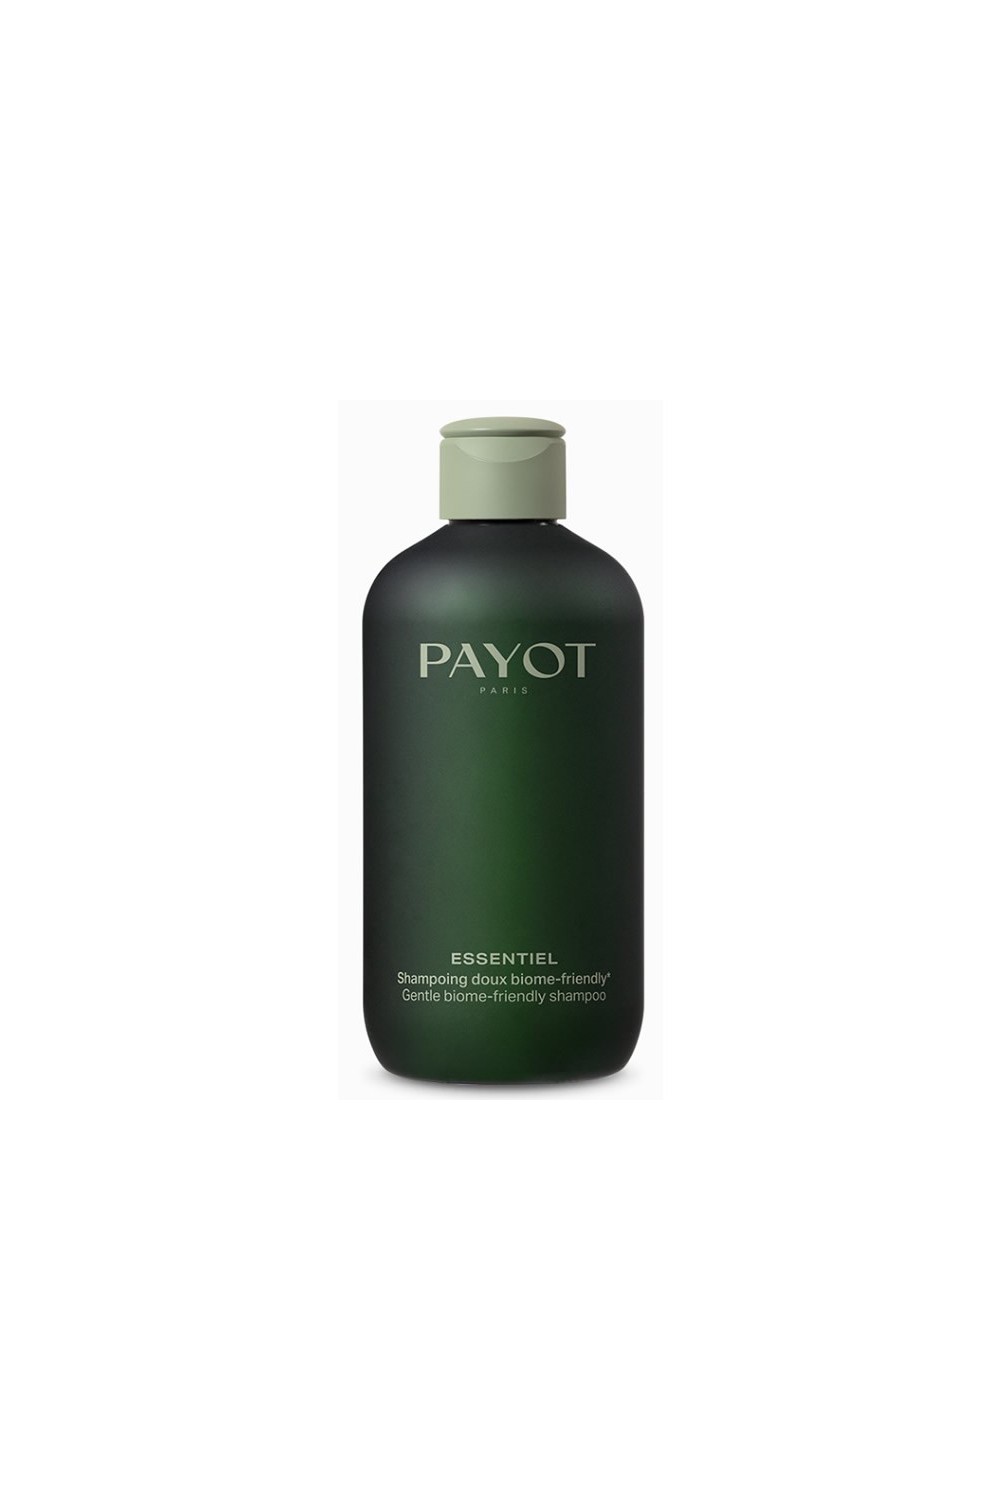 Payot Essentiel Shampoing Doux Biome-Friendly 280ml